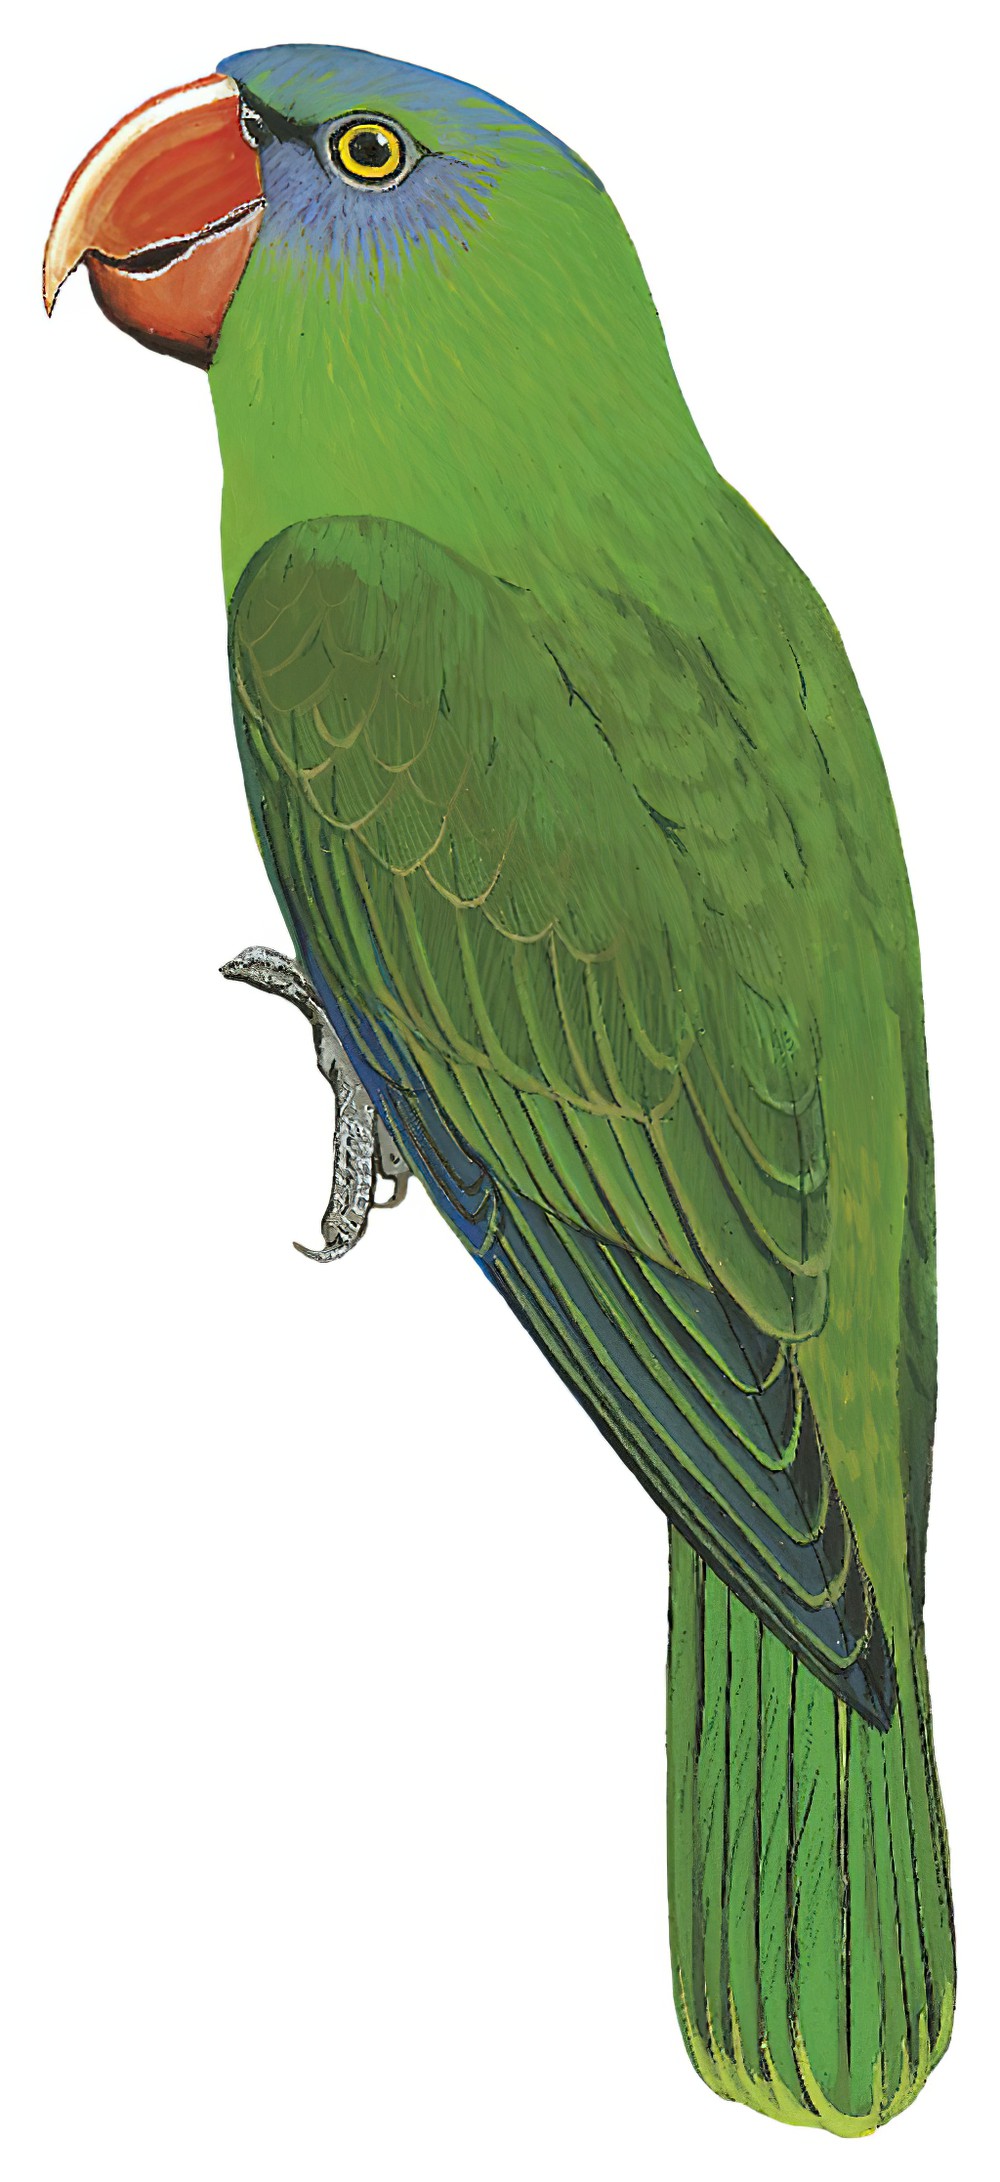 Black-lored Parrot / Tanygnathus gramineus